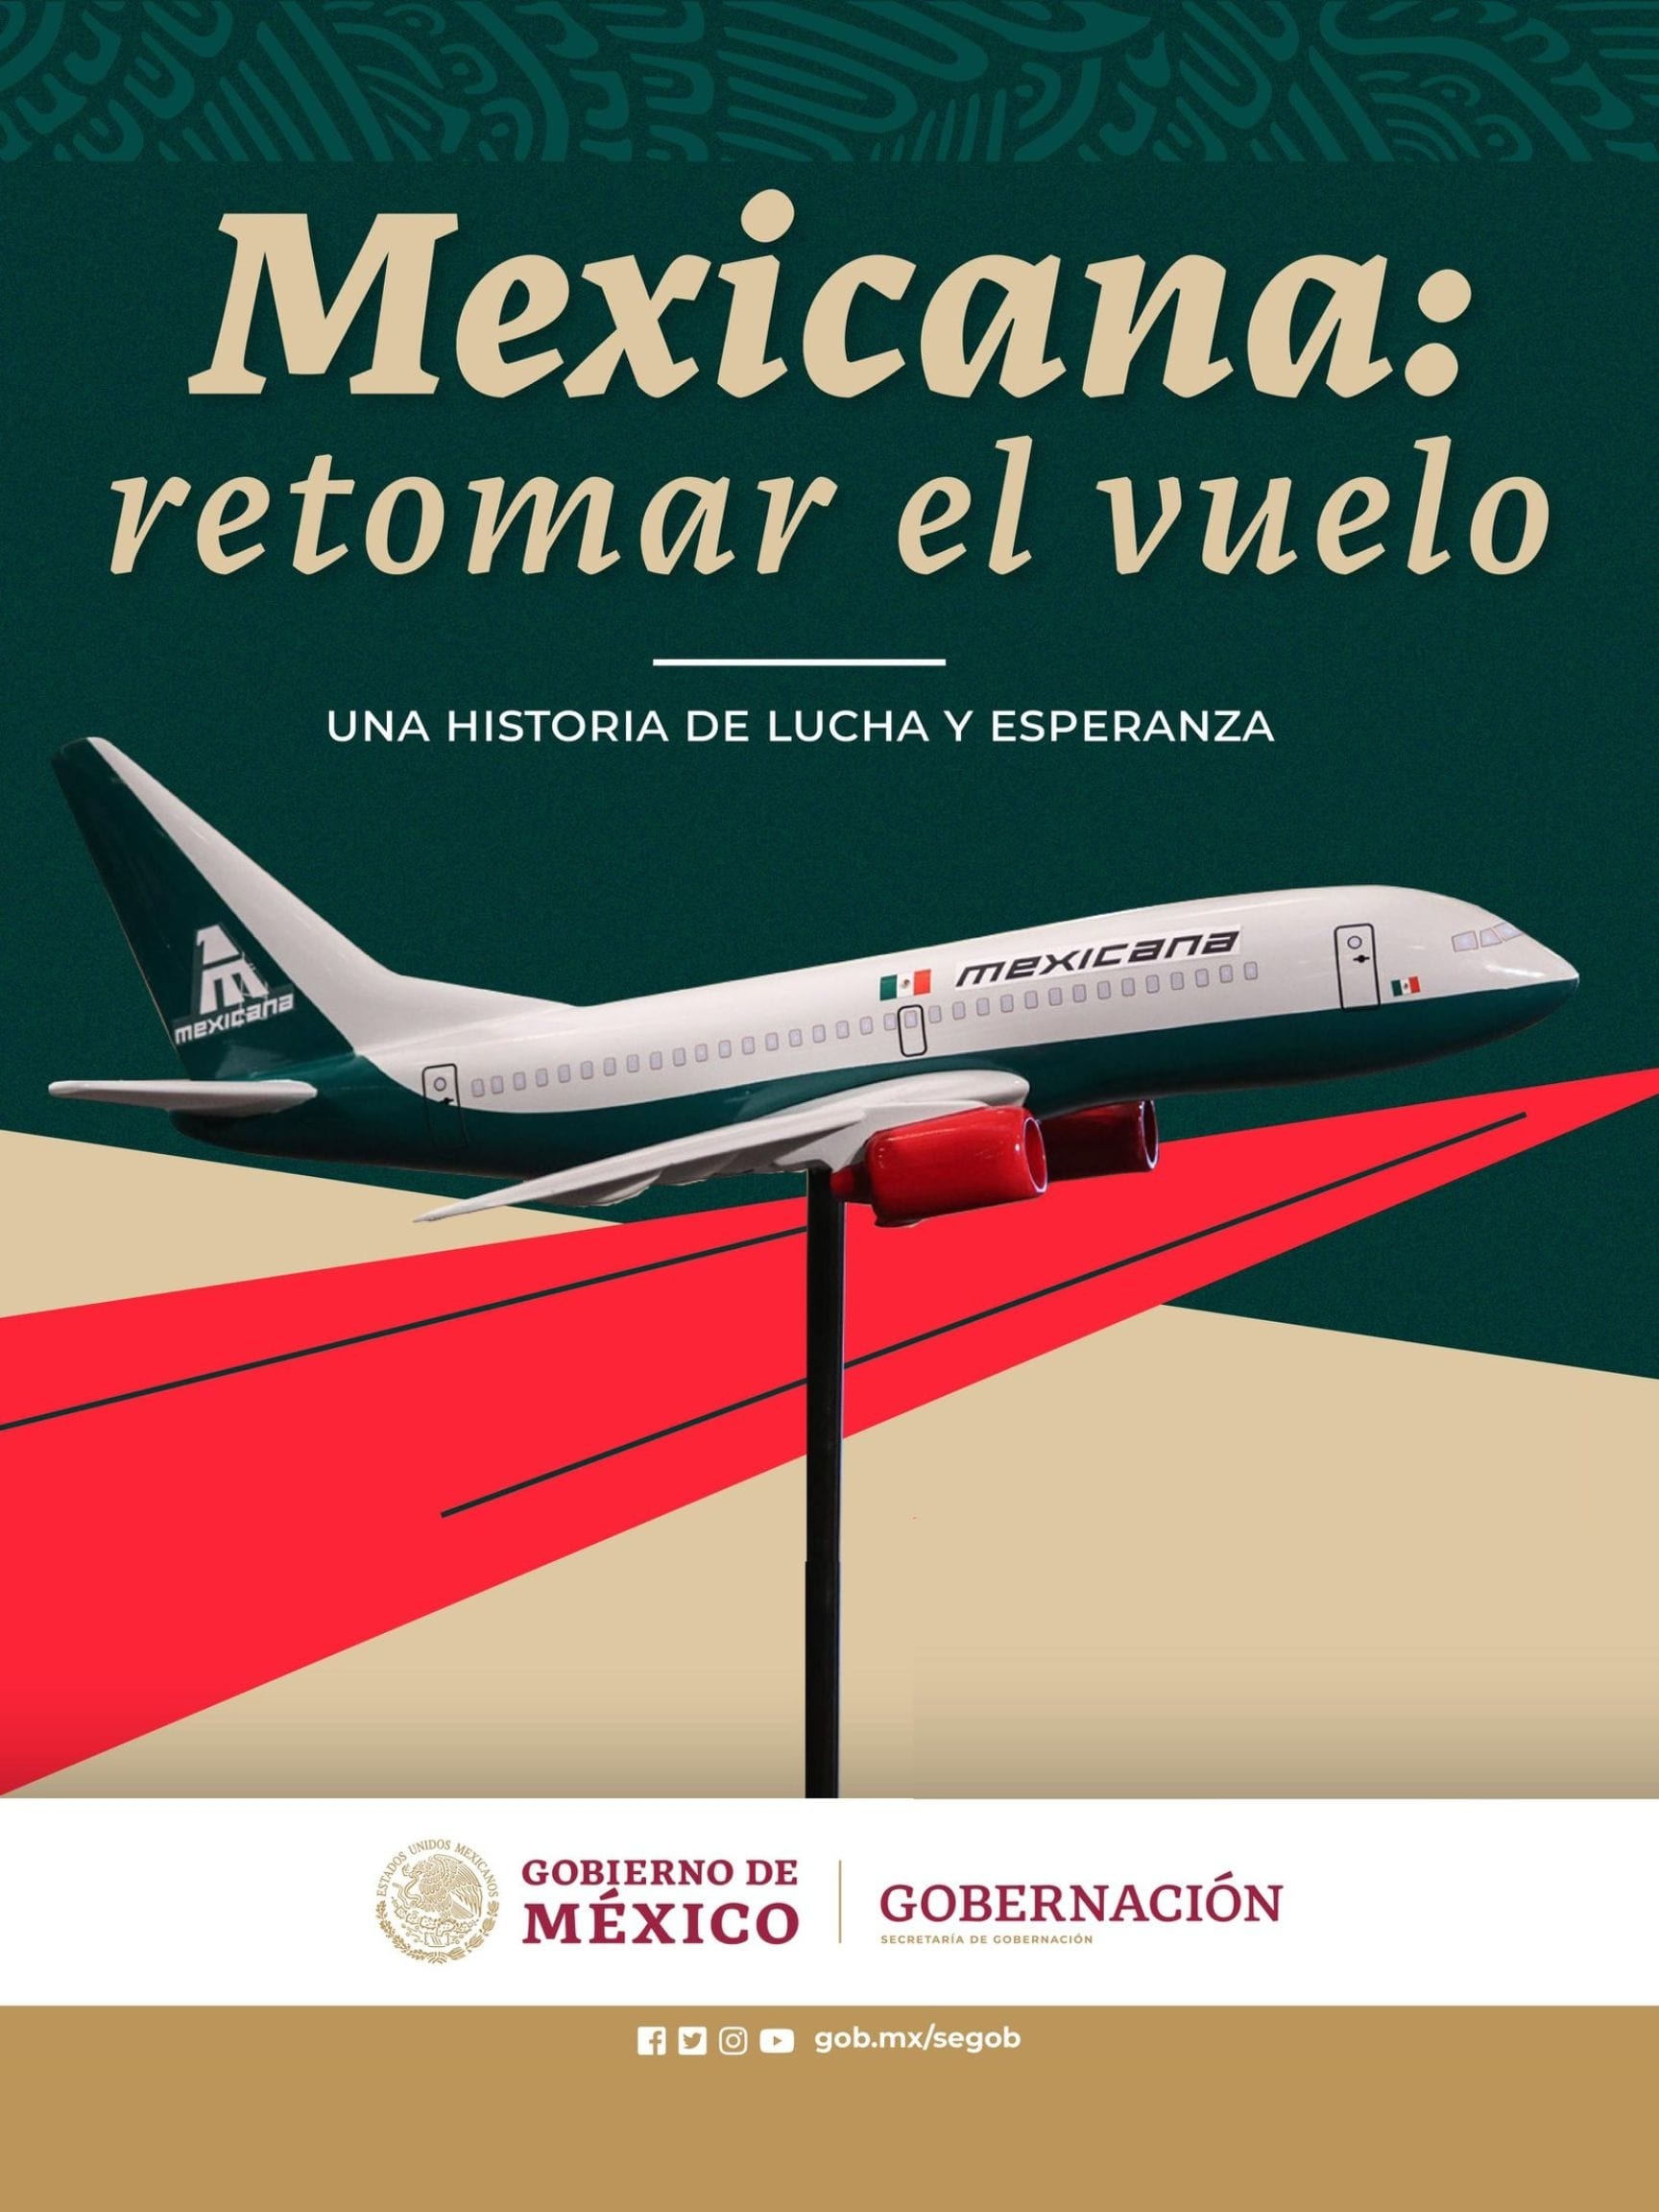 Mexicana: Retomar el vuelo